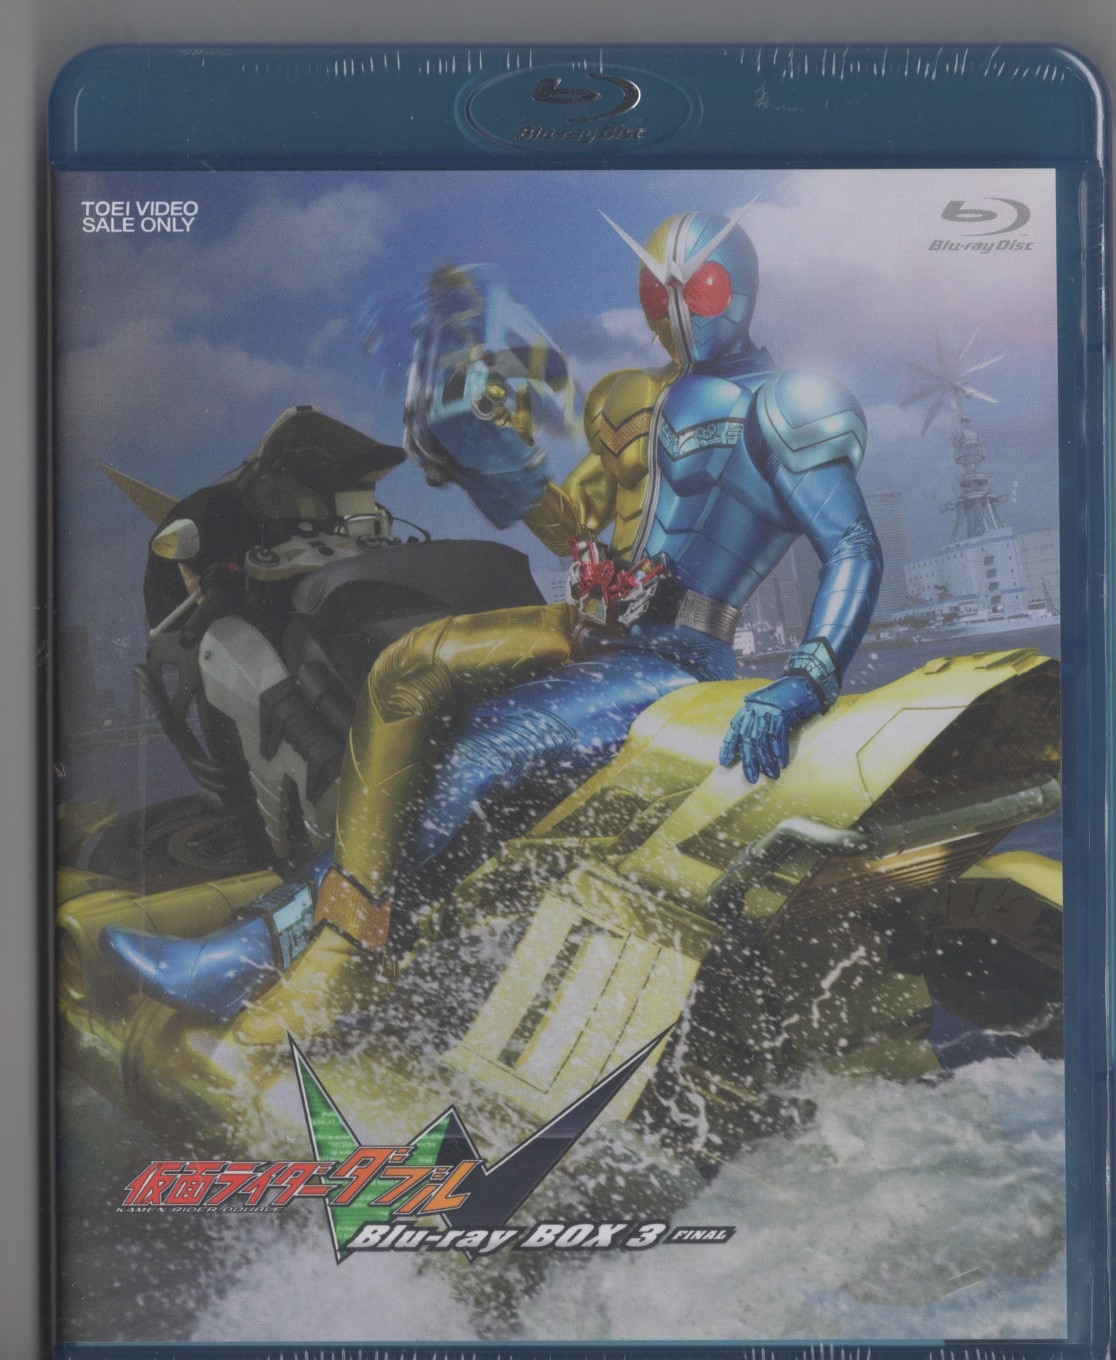 仮面ライダーW Blu-ray BOX 1 初回限定BOX付 - 邦画・日本映画